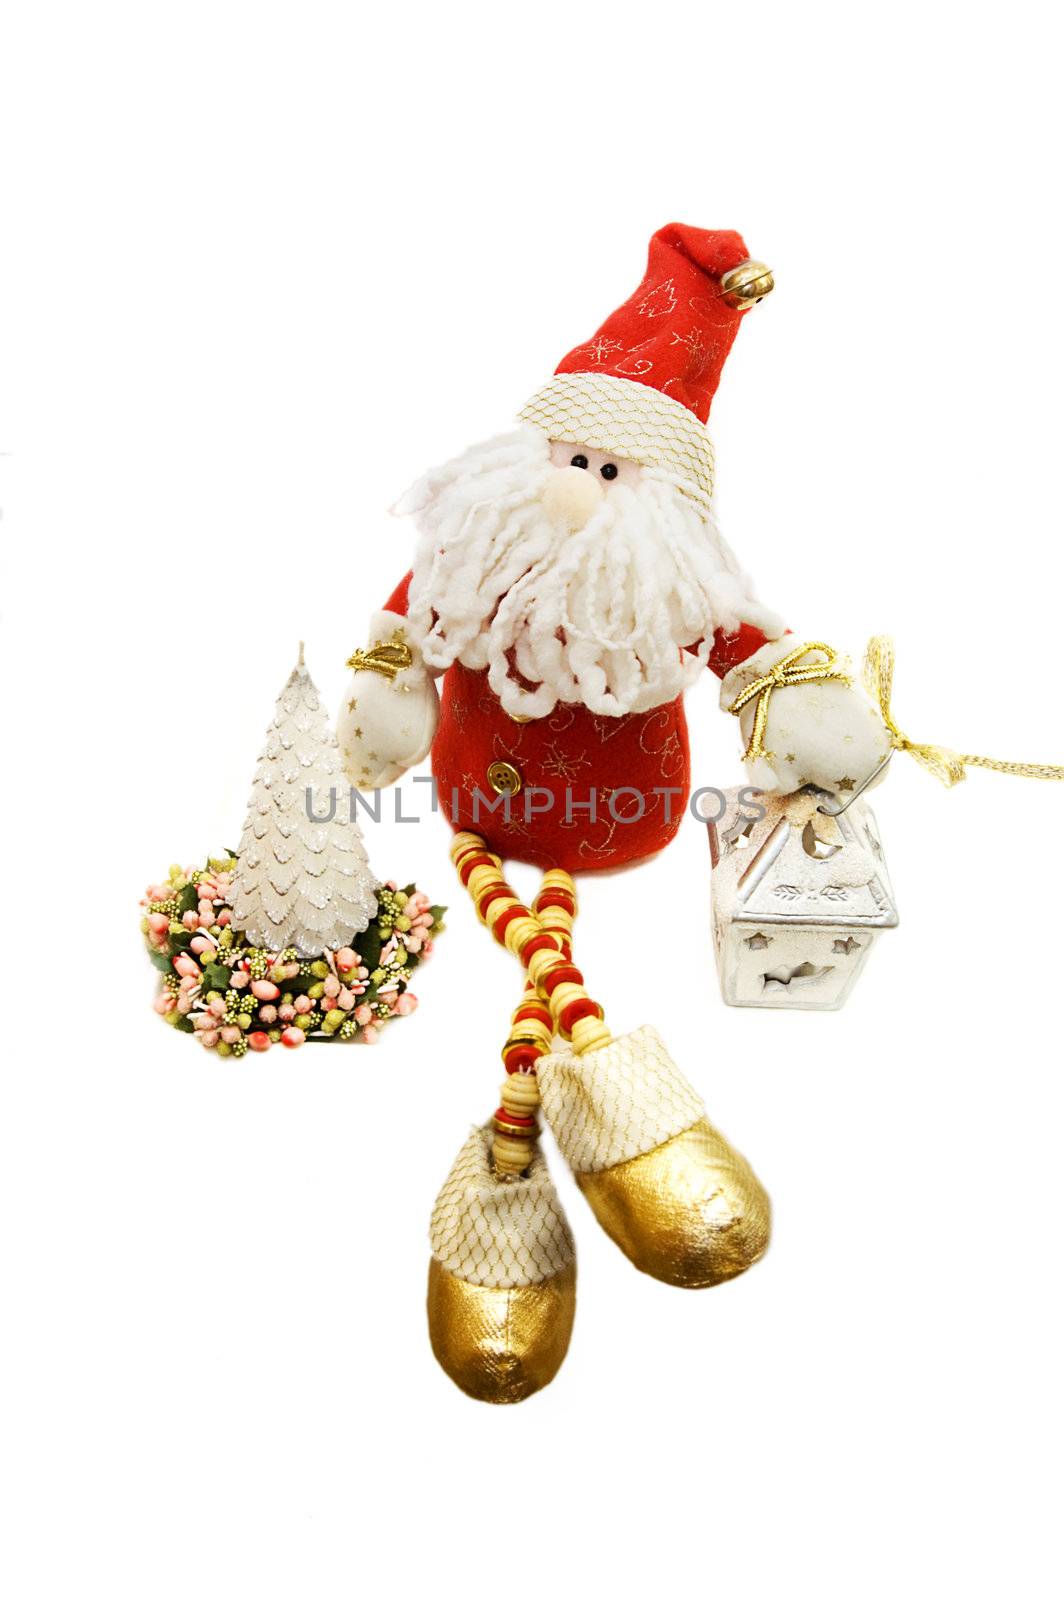 Santa Claus toy with Christmas tree on white